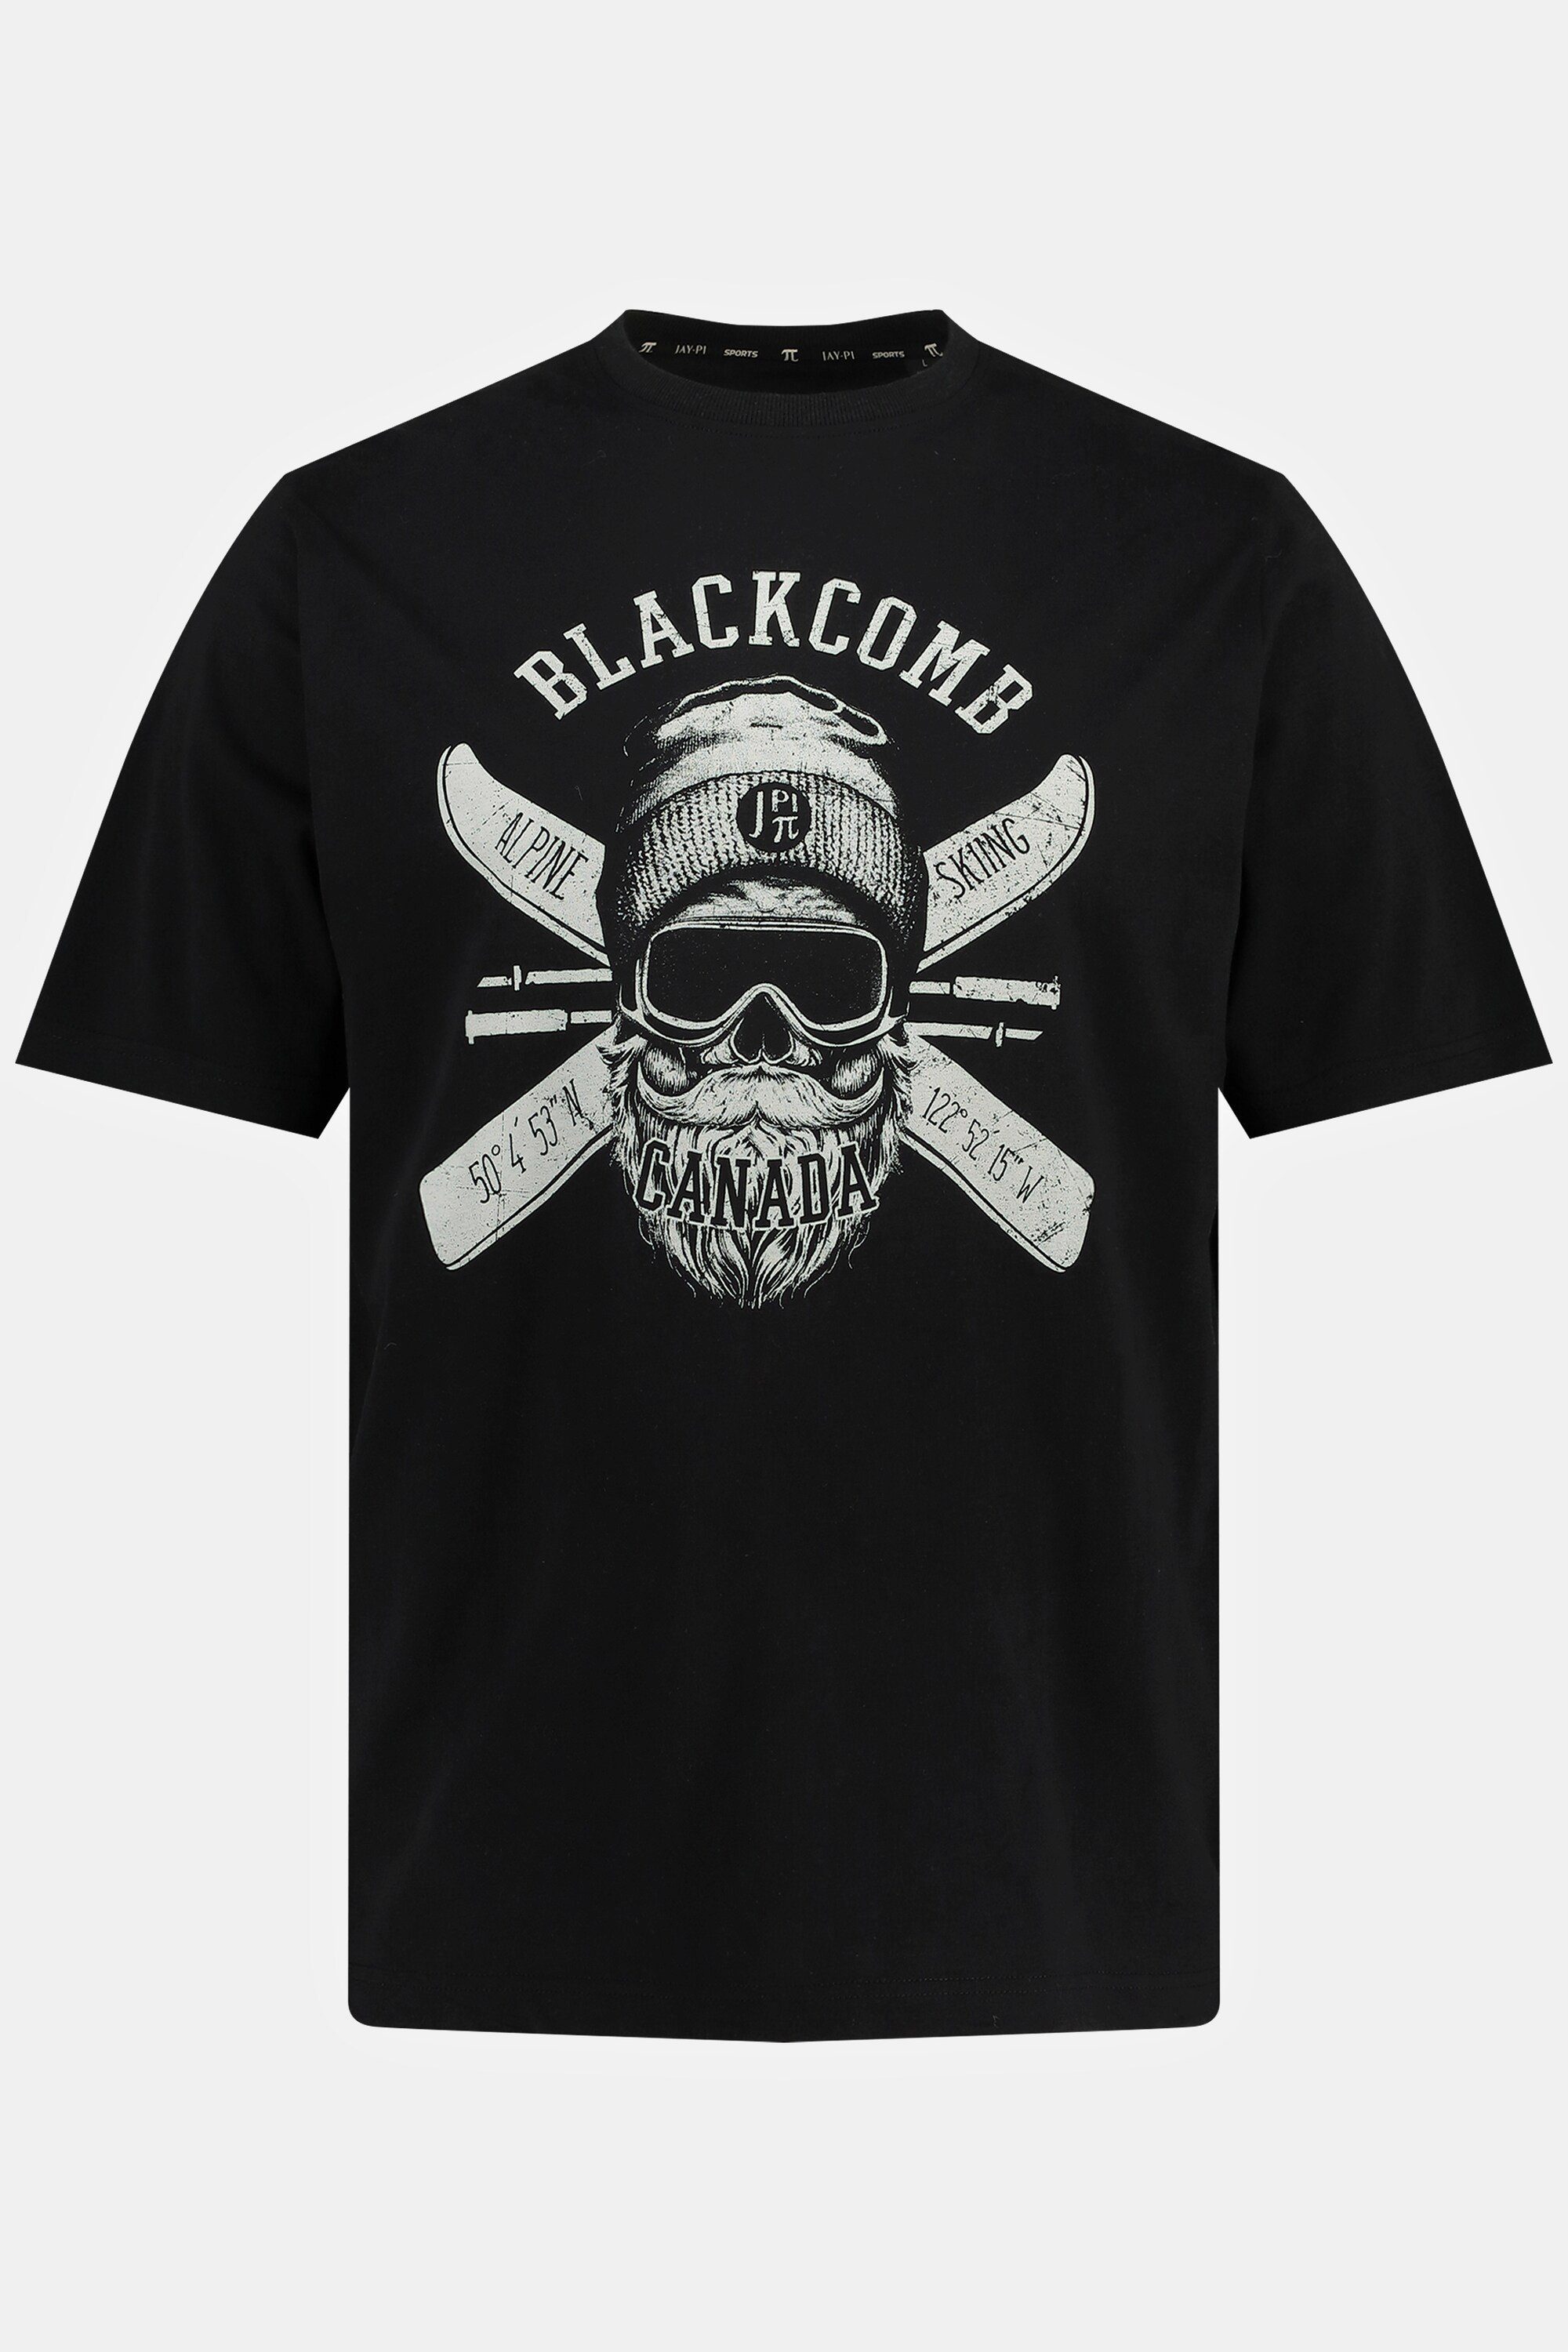 Blackcomb Print JP1880 T-Shirt T-Shirt Halbarm Skiwear